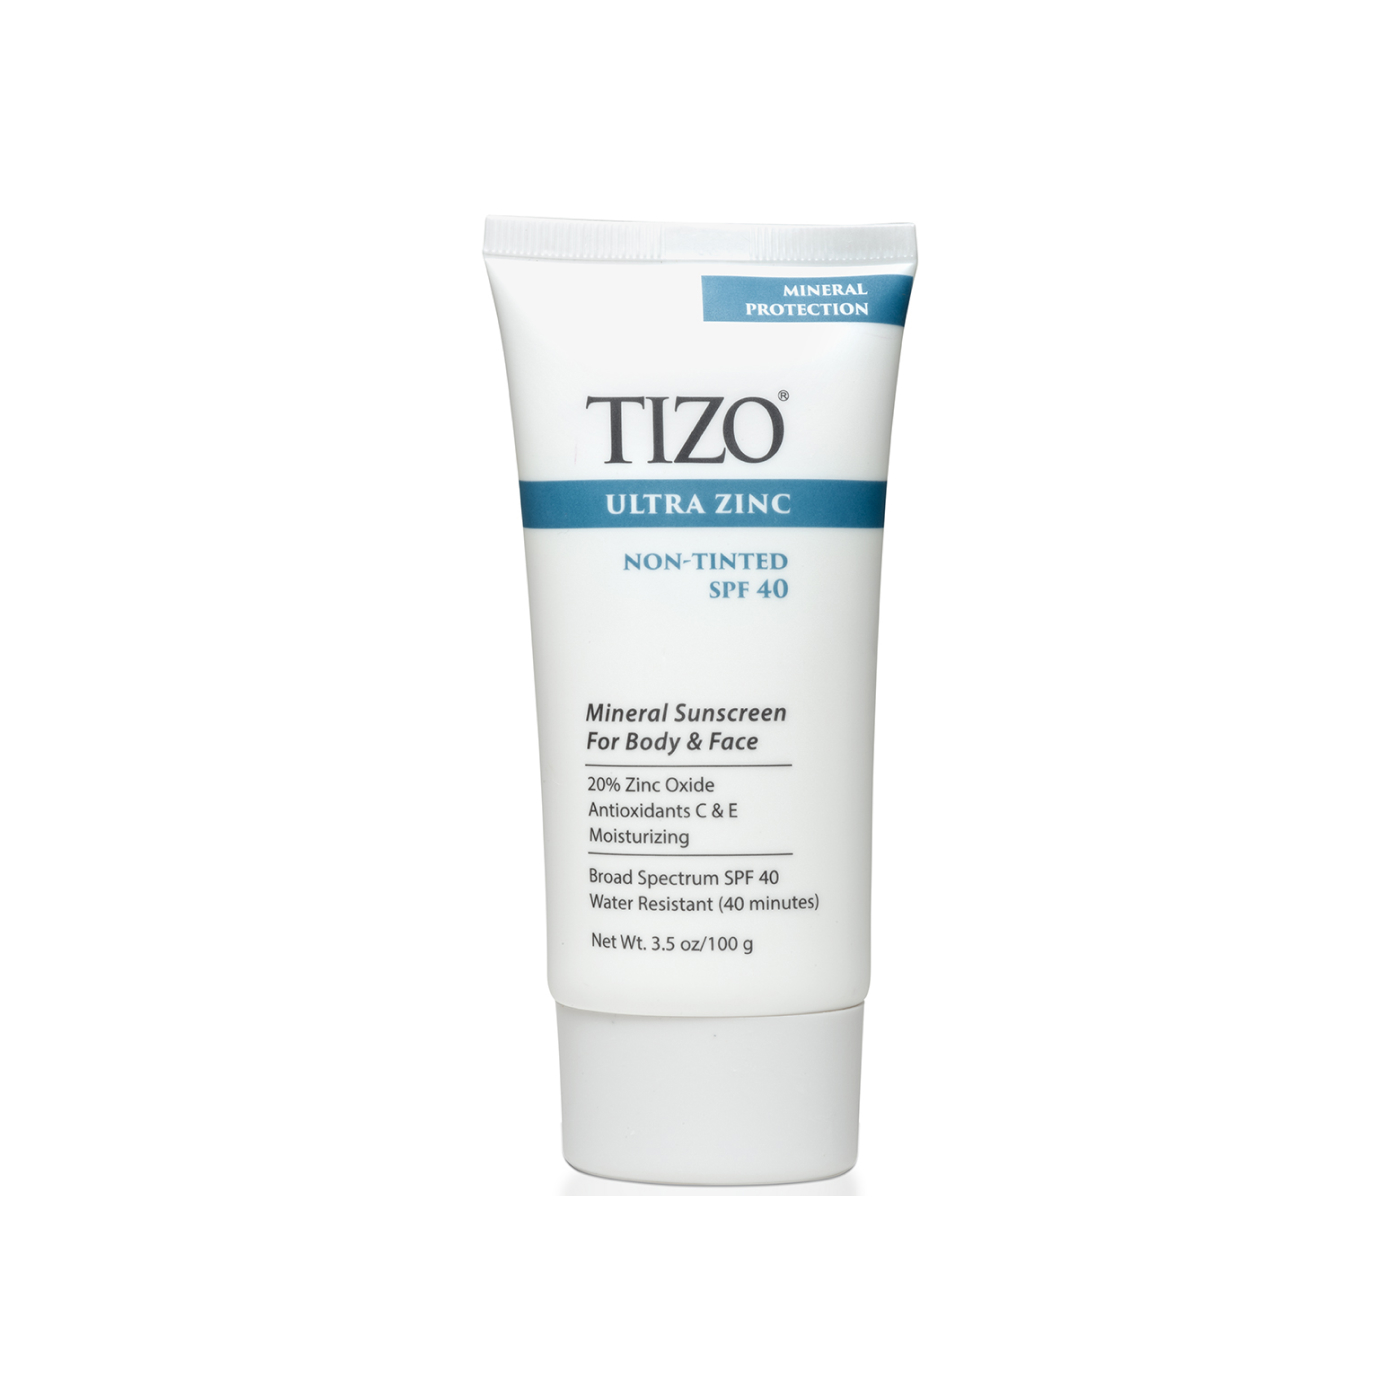 Солнцезащитный крем spf 40 для лица. Tizo Ultra Zinc Mineral Sunscreen for body & face Tinted spf40+. Tizo Ultra Zinc SPF-40. Ultra Zinc Tinted Mineral Sunscreen. Tizo Ultra Zinc.